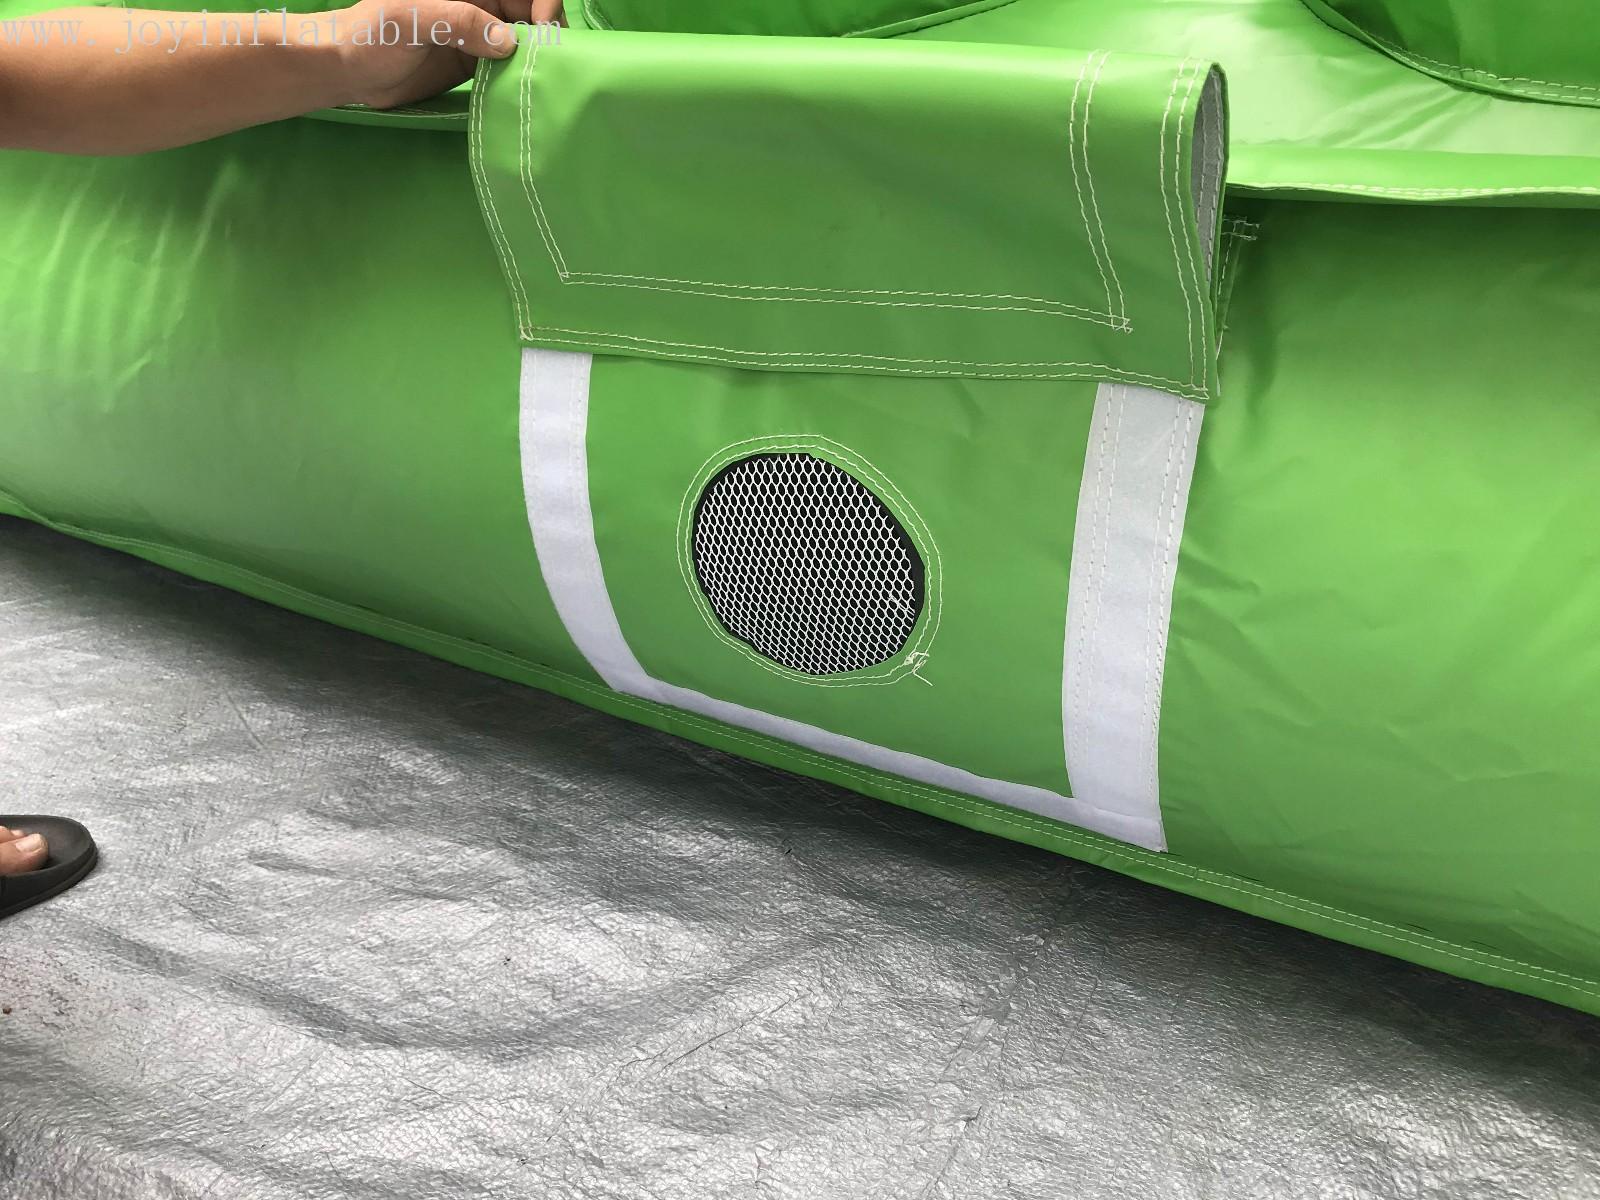 mattress airbag jump series for outdoor